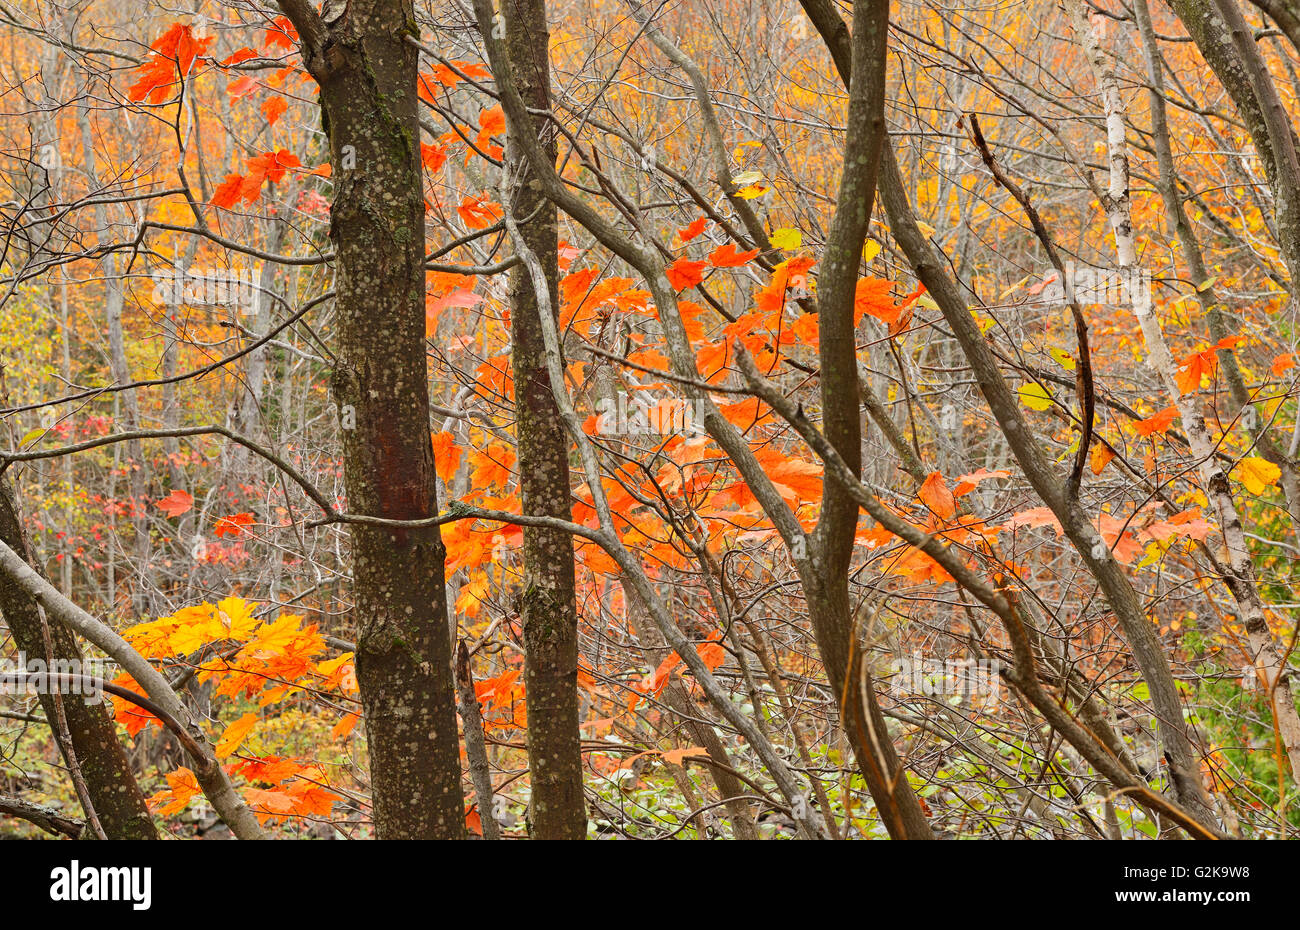 Scieries de arbres en automne couleurs Dorset Ontario Canada Banque D'Images